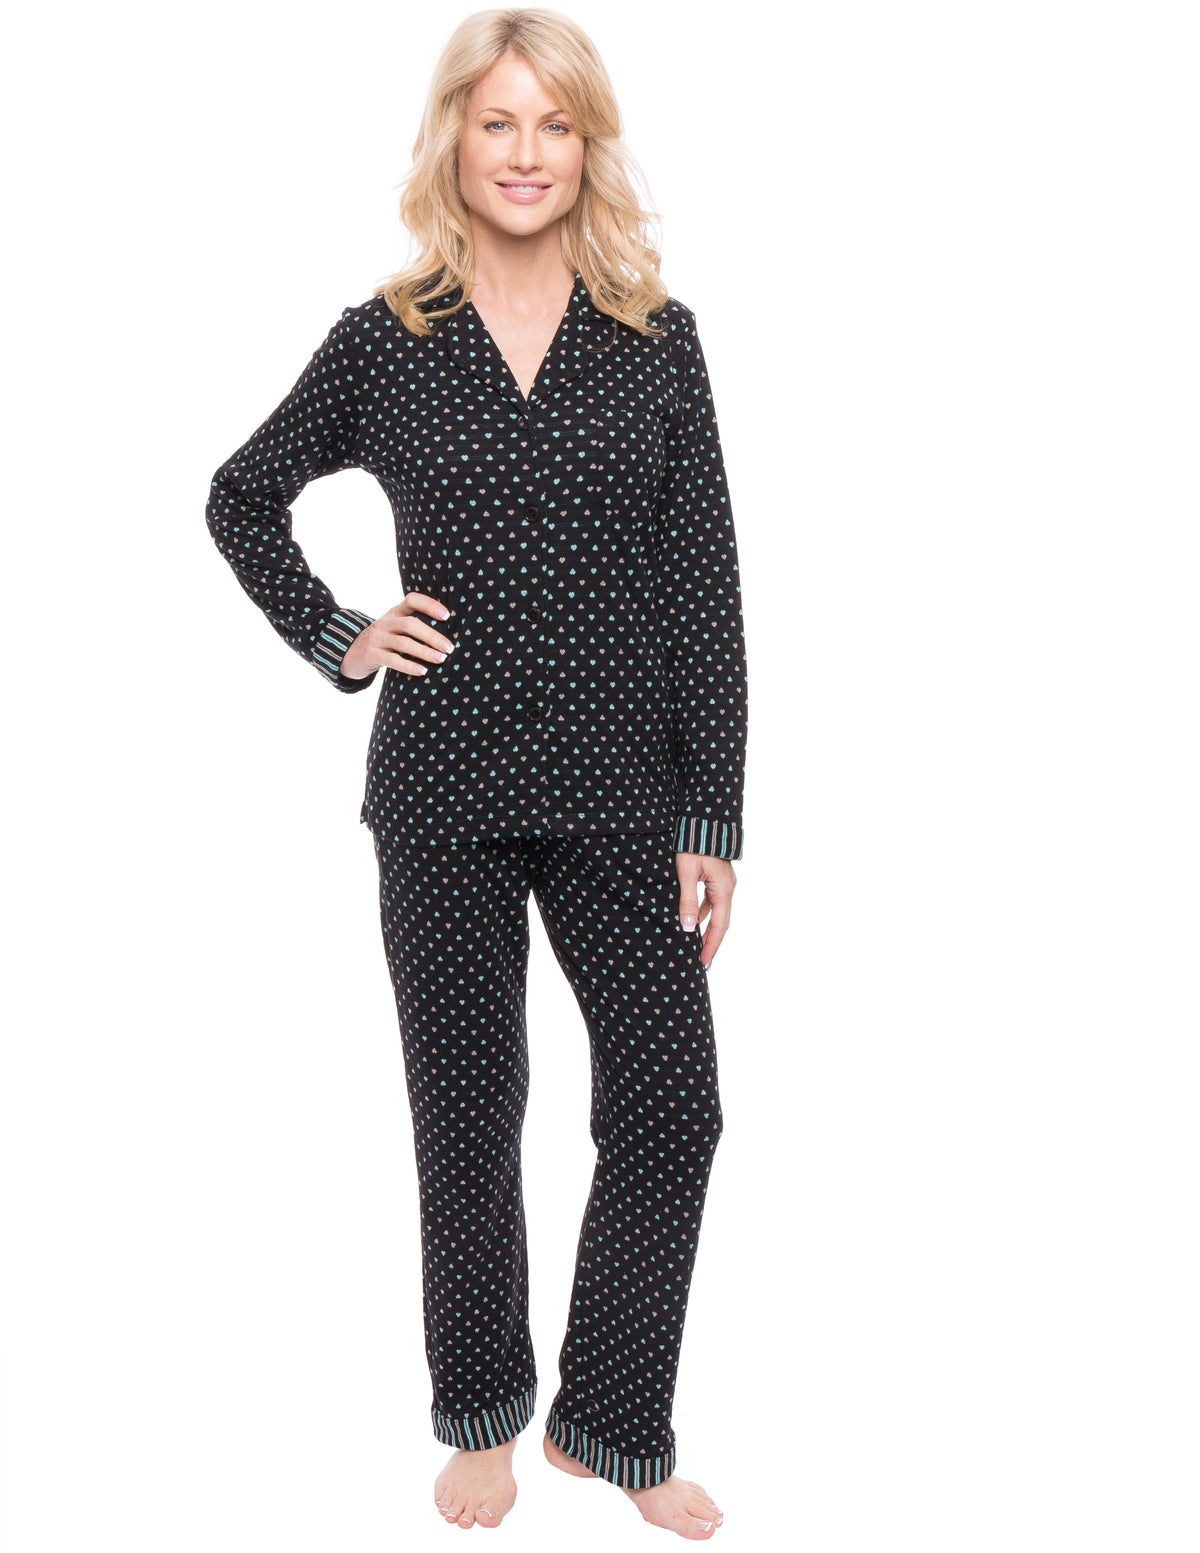 Women's Double Layer Knit Jersey Pajama Sleepwear Set - Hearts Black/Aqua